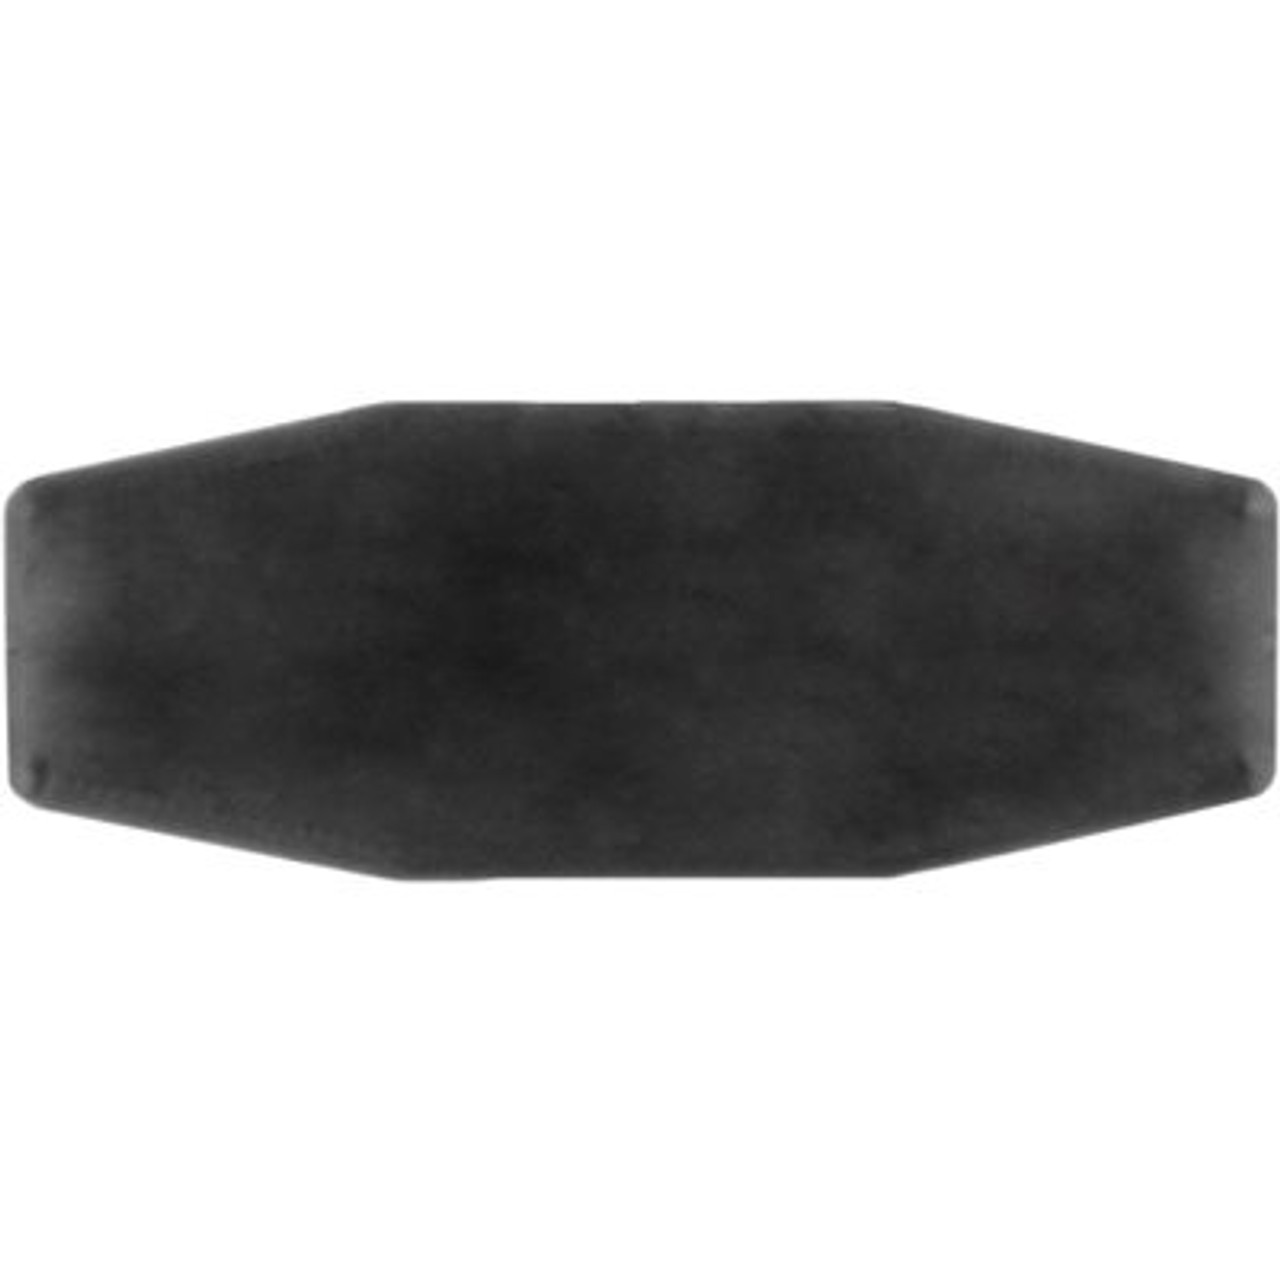 Description : Hood Seal Retainer
Material : Nylon
Color : Black
Stem Length : 10MM
Head Size : 5 x 13MM
OEM Number : 85438-1R000
Pcs/Unit: 50
Country: KR
Catalog Page #: 724